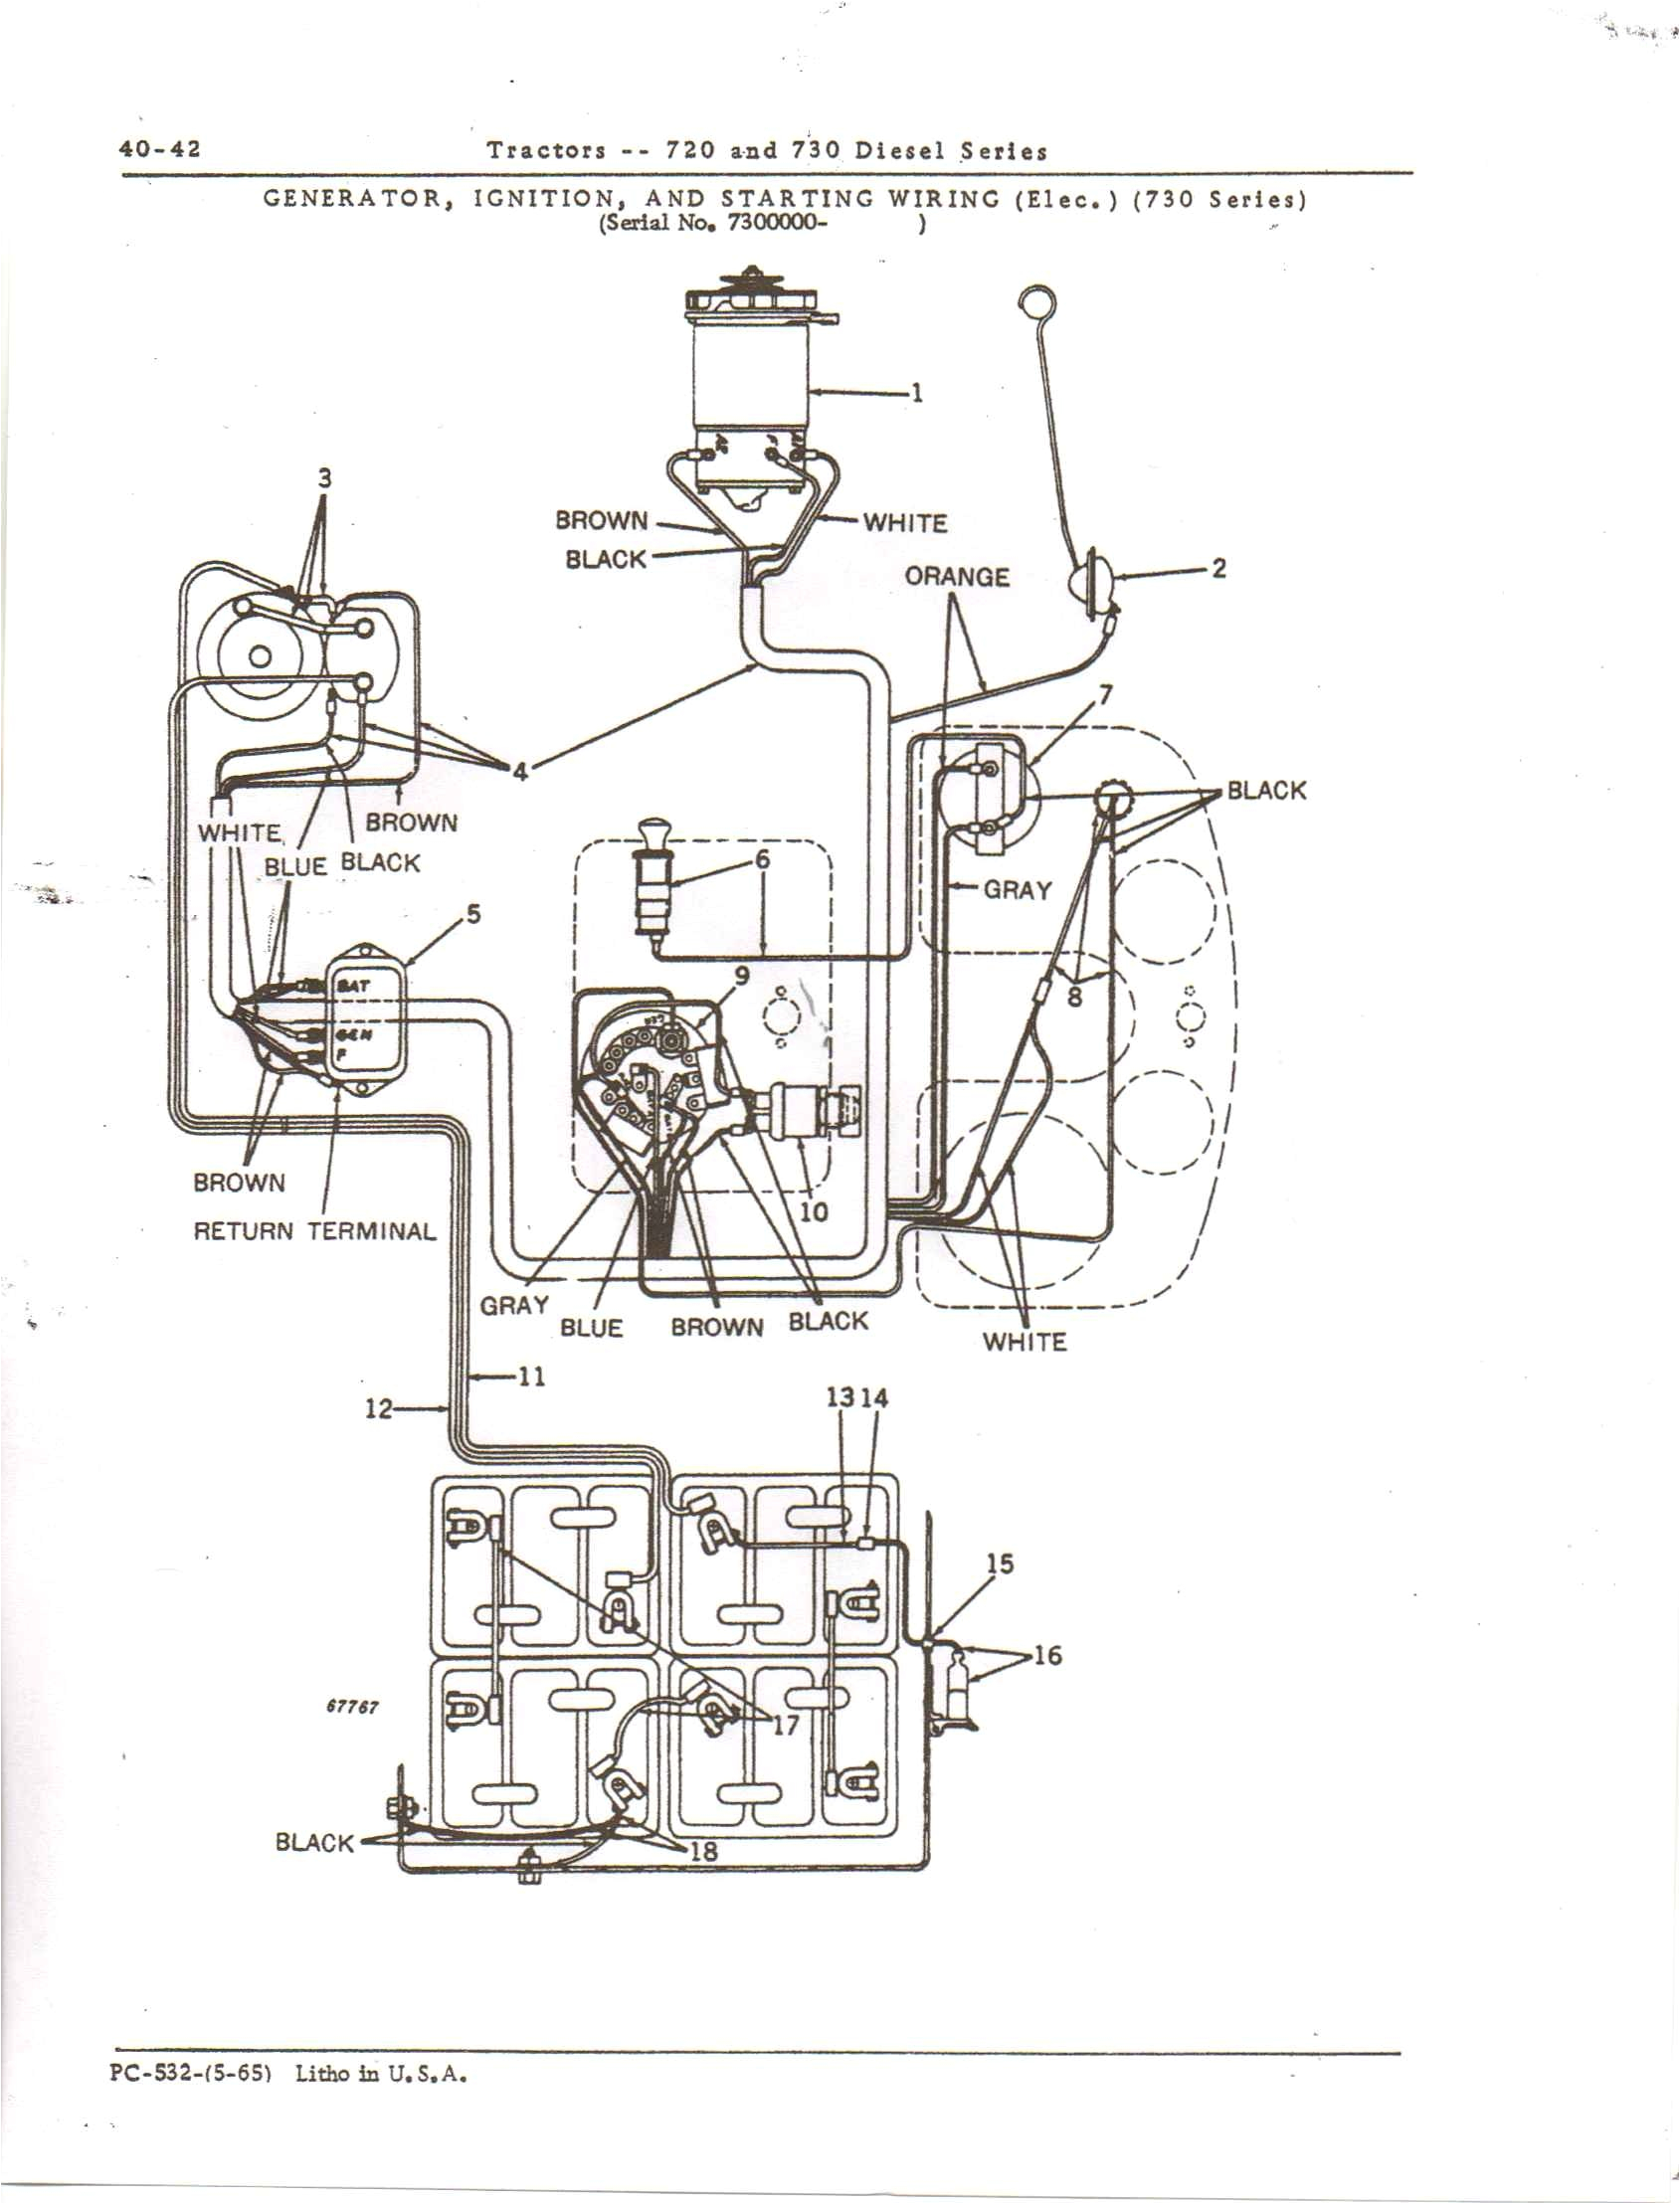 john deere 170 wiring diagram wiring diagram databasejohn deere lawn mower wiring diagram